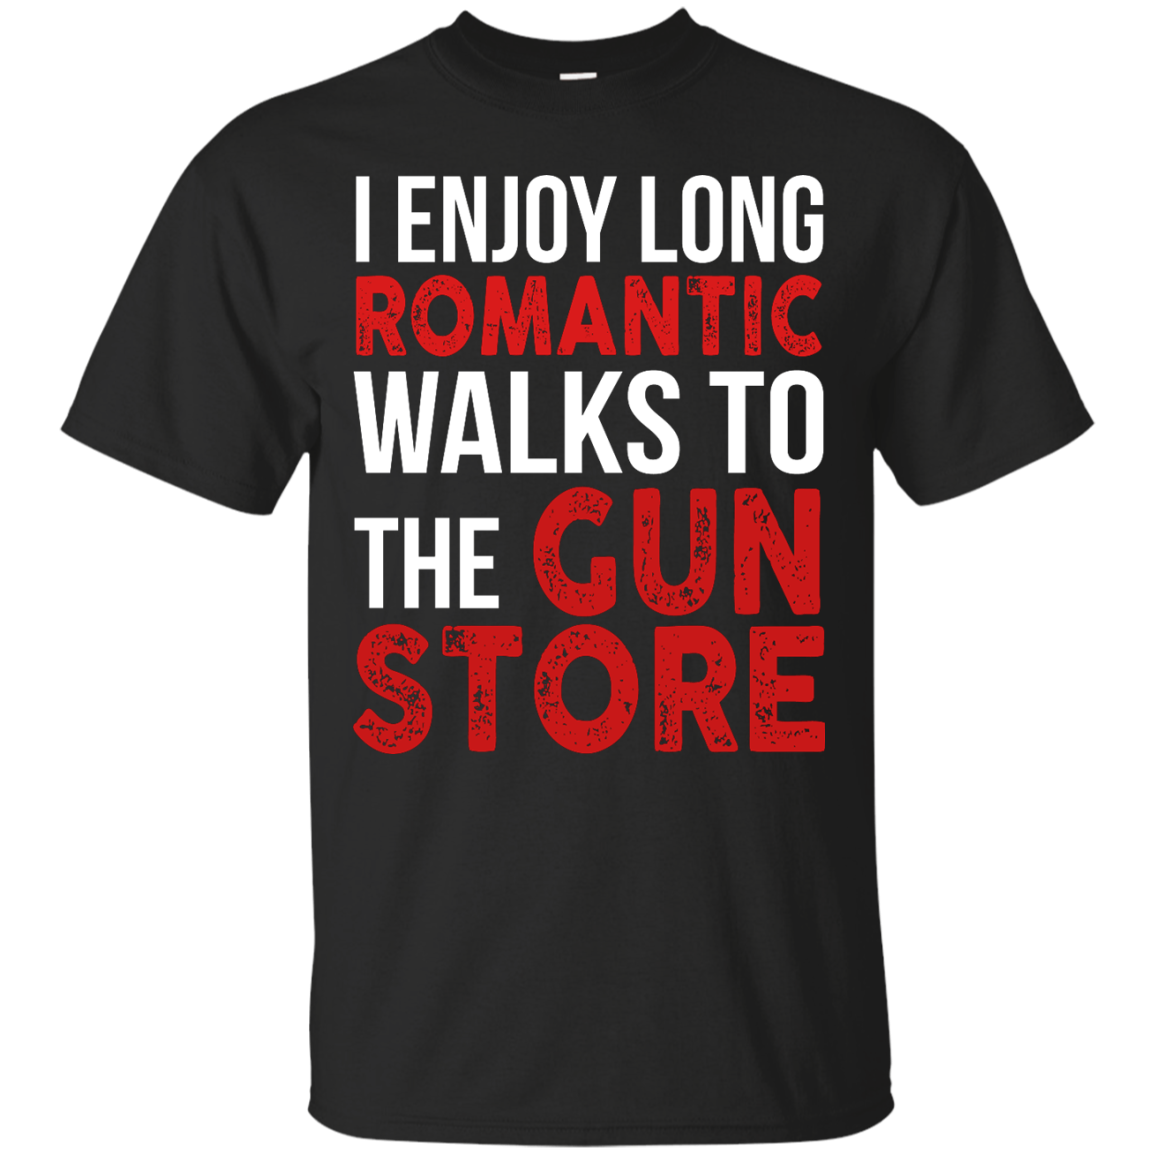 I enjoy long romantic walks to the gun store shirt